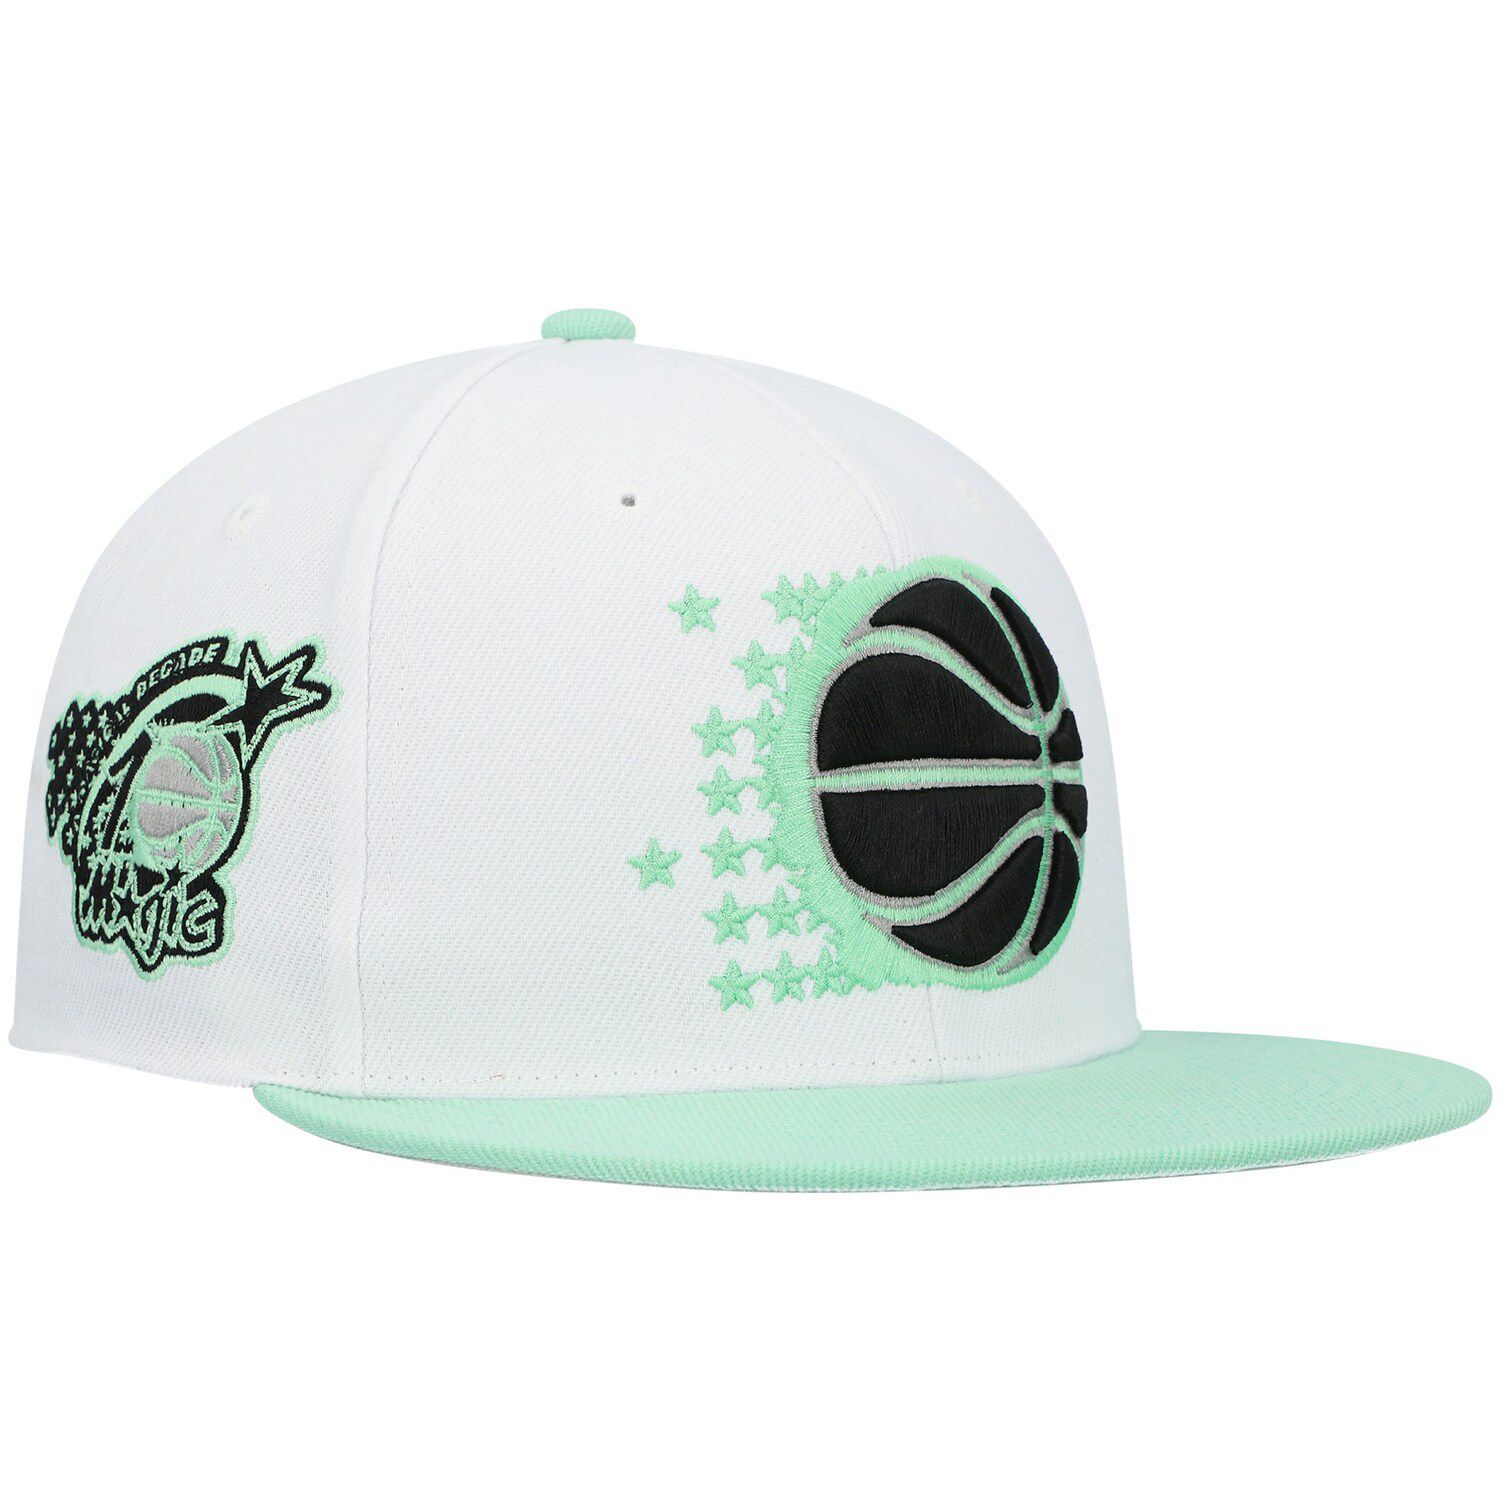 Mitchell & Ness Men's Boston Celtics Hardwood Classic Reload Snapback Cap - Black/Green